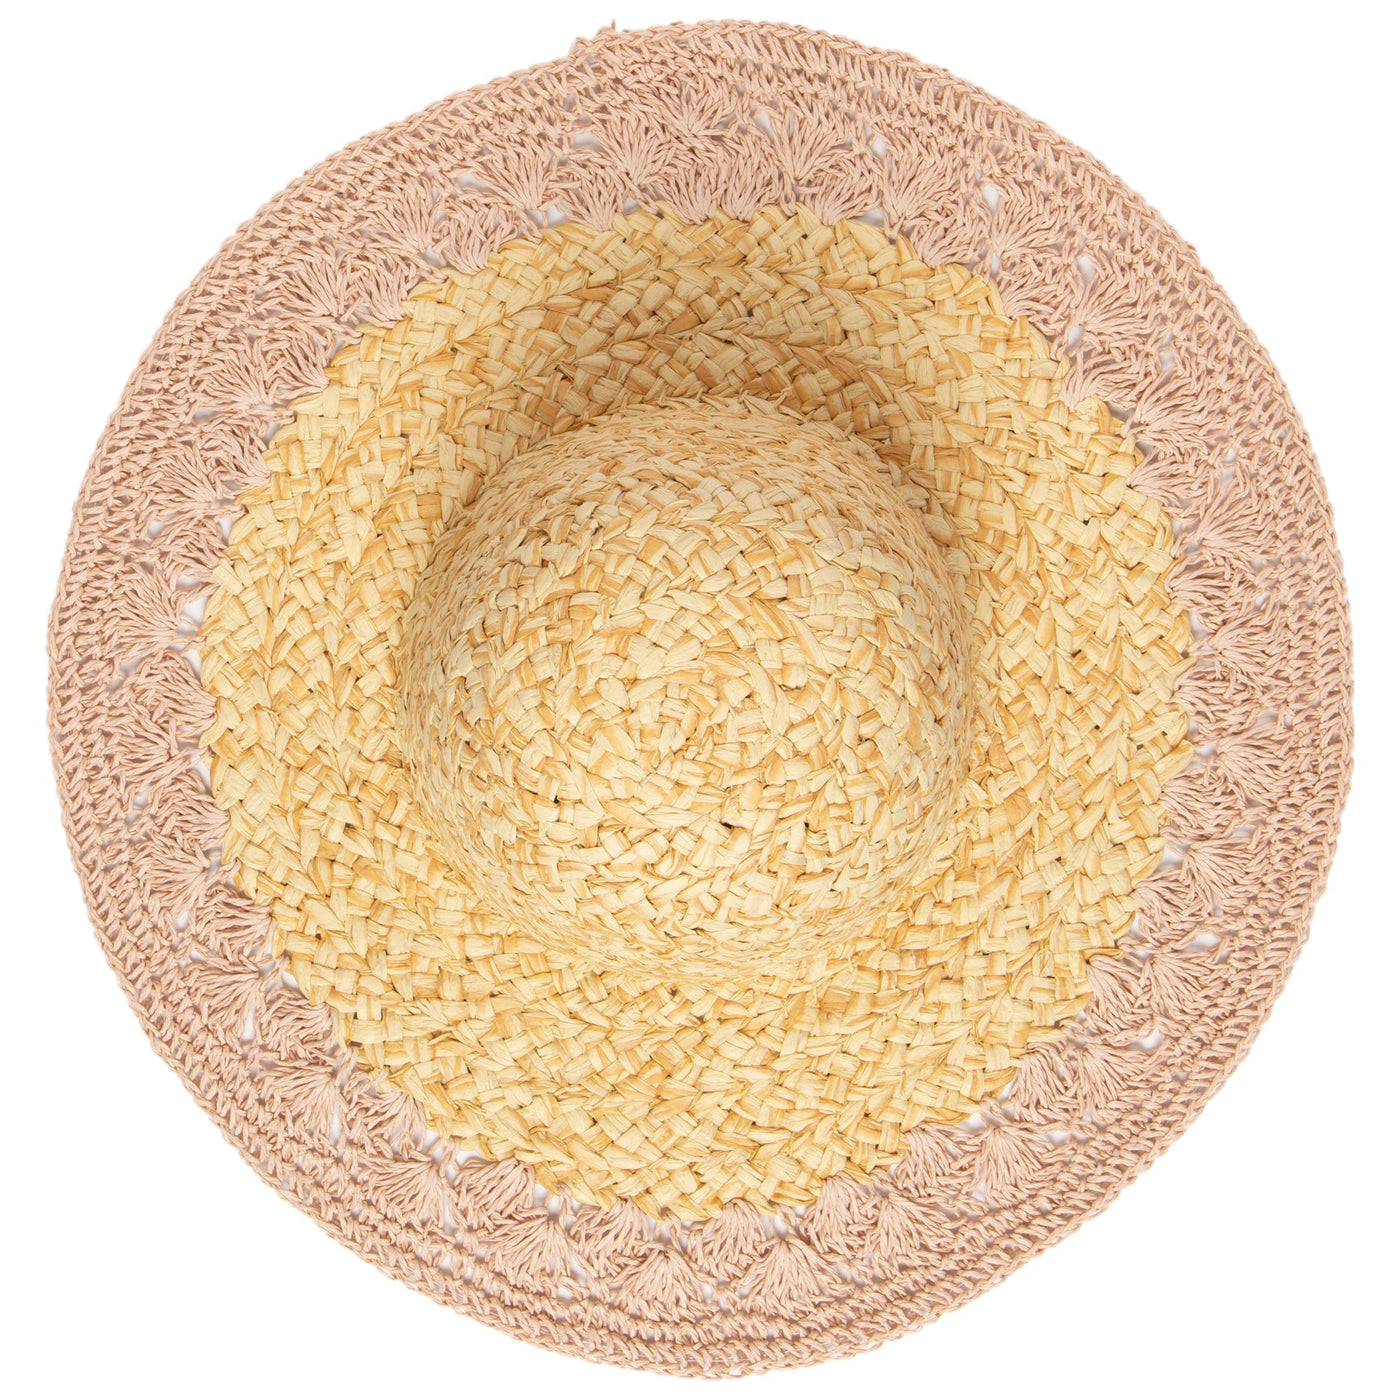 SUN BRIM - Women's Paper Straw Hat With Crochet Brim (PBL3203)